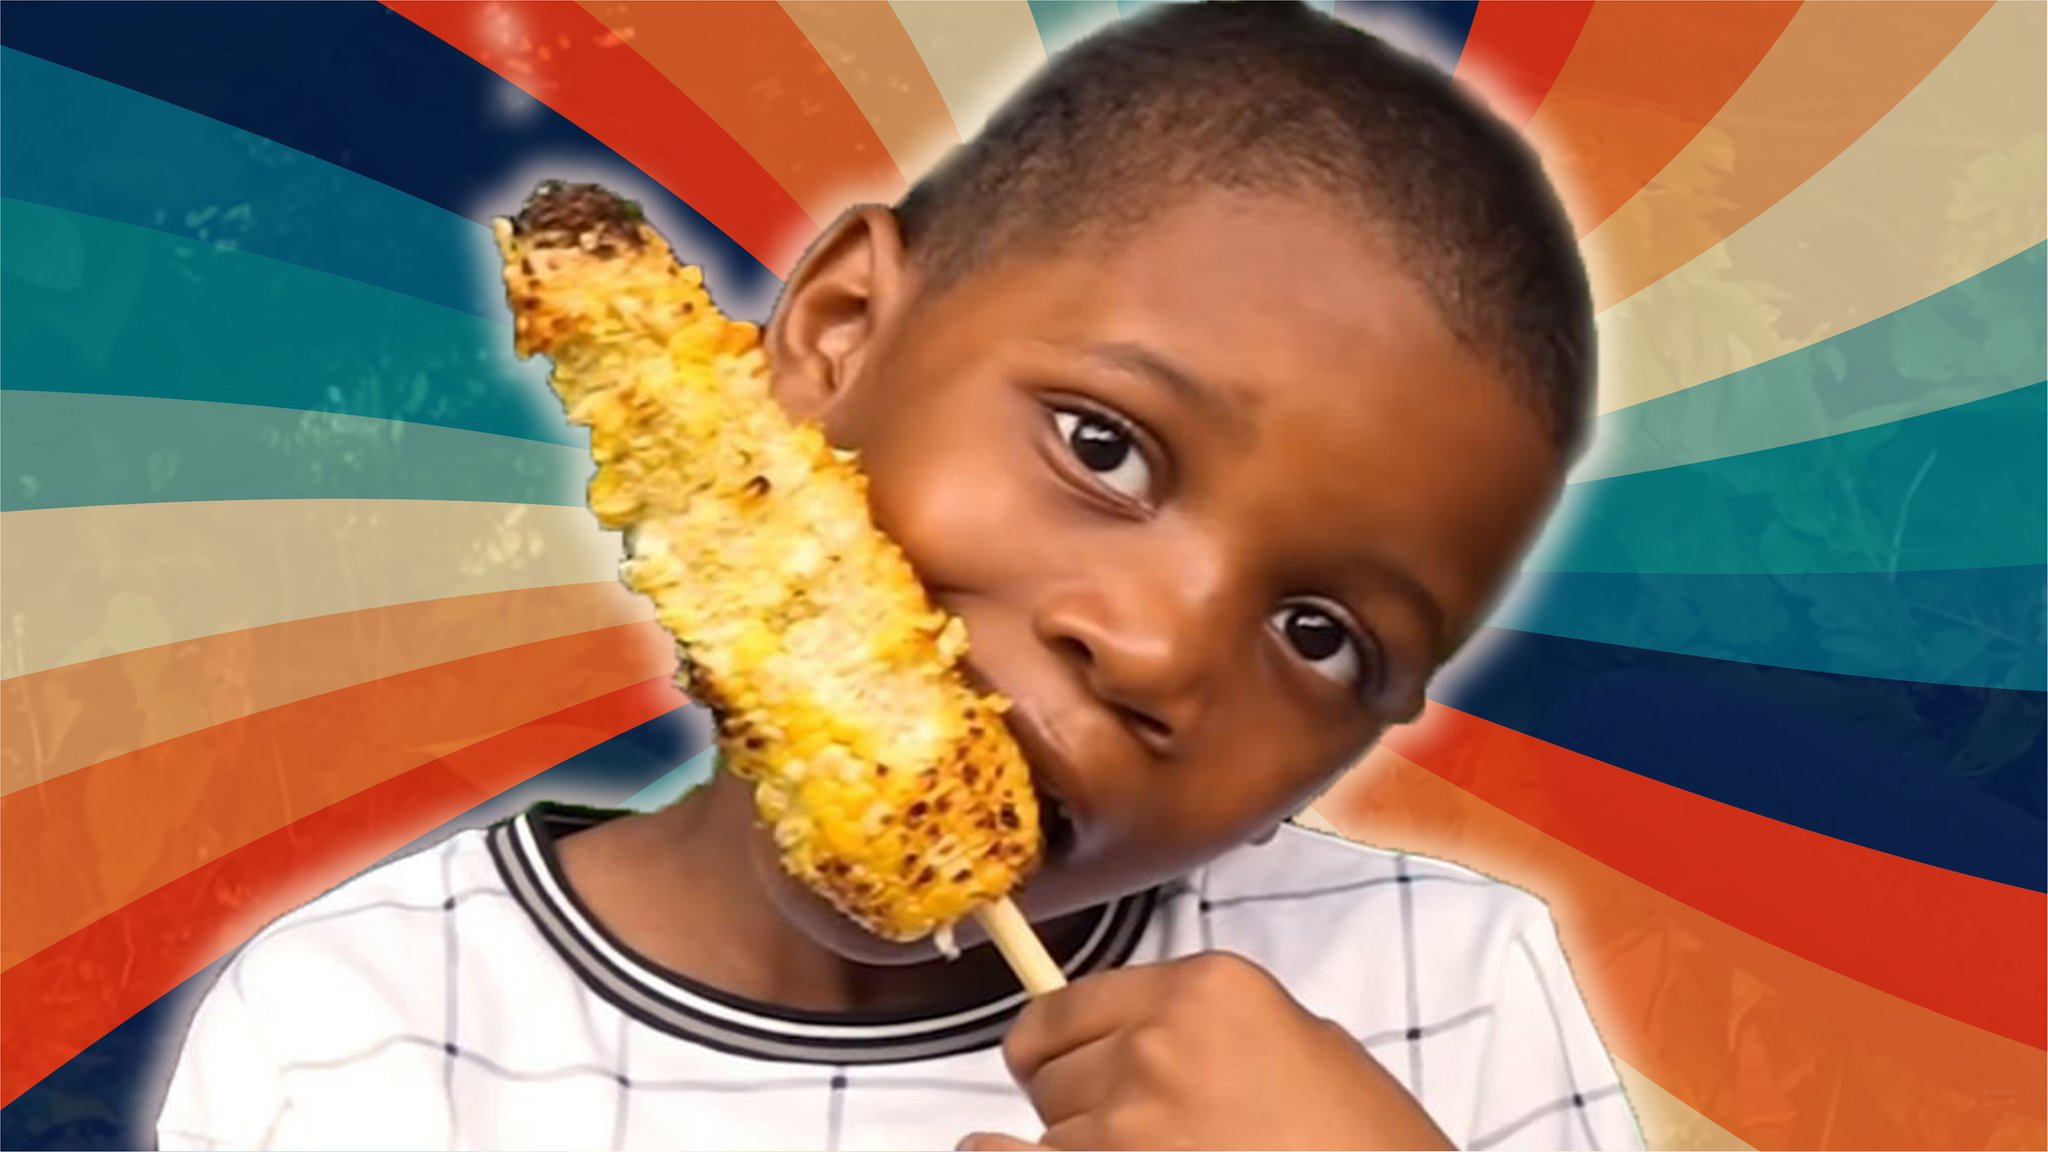 Corn kid: Why are people singing about corn on TikTok? - CBBC Newsround